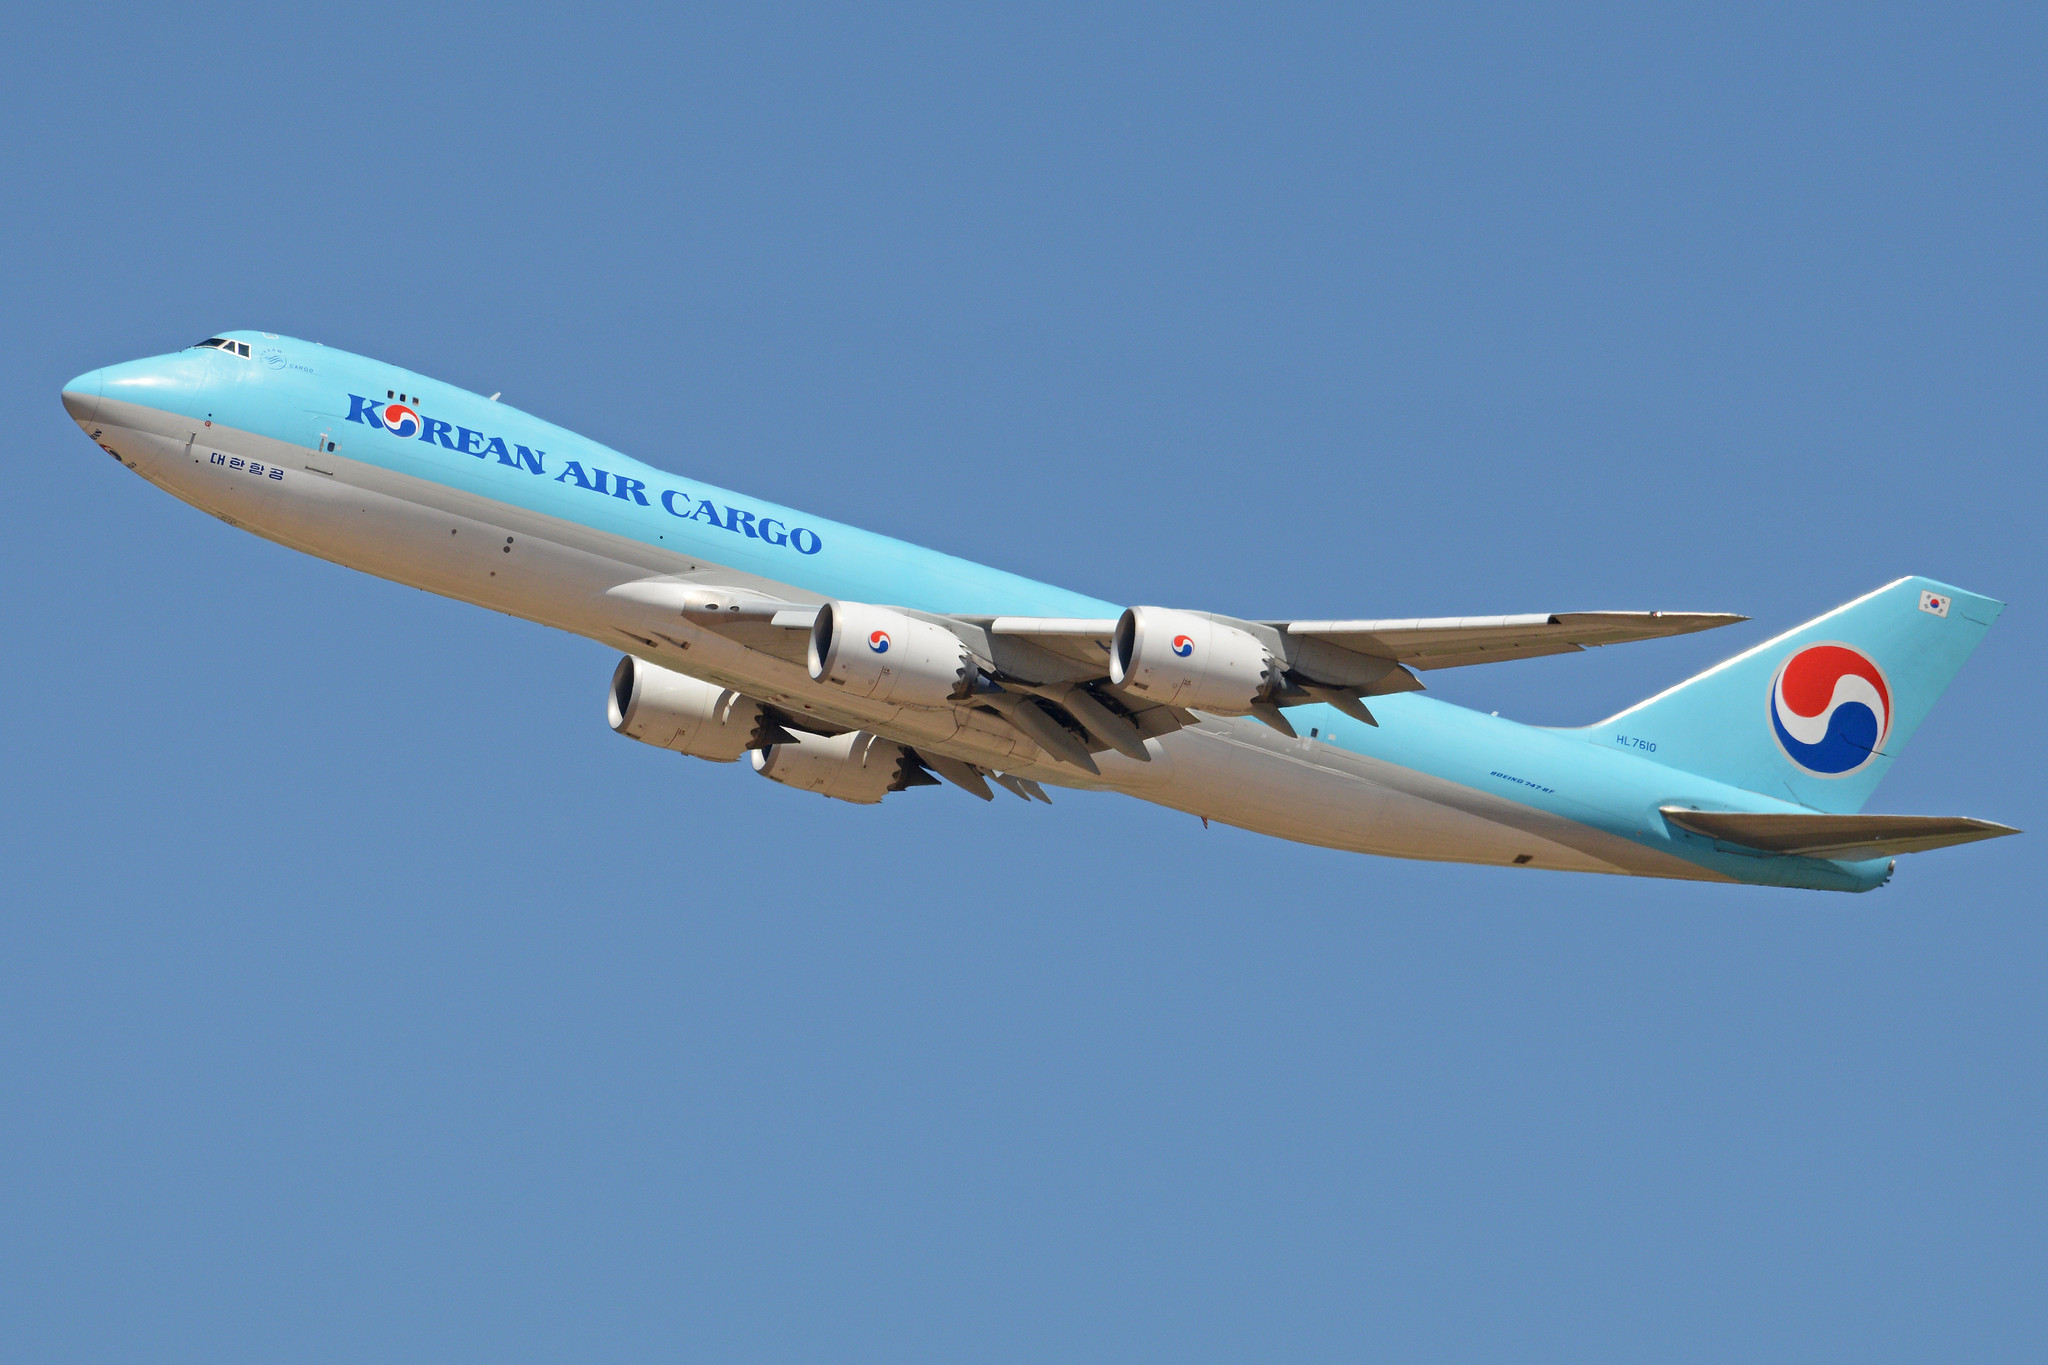 Image shows Korean Air Cargo plane